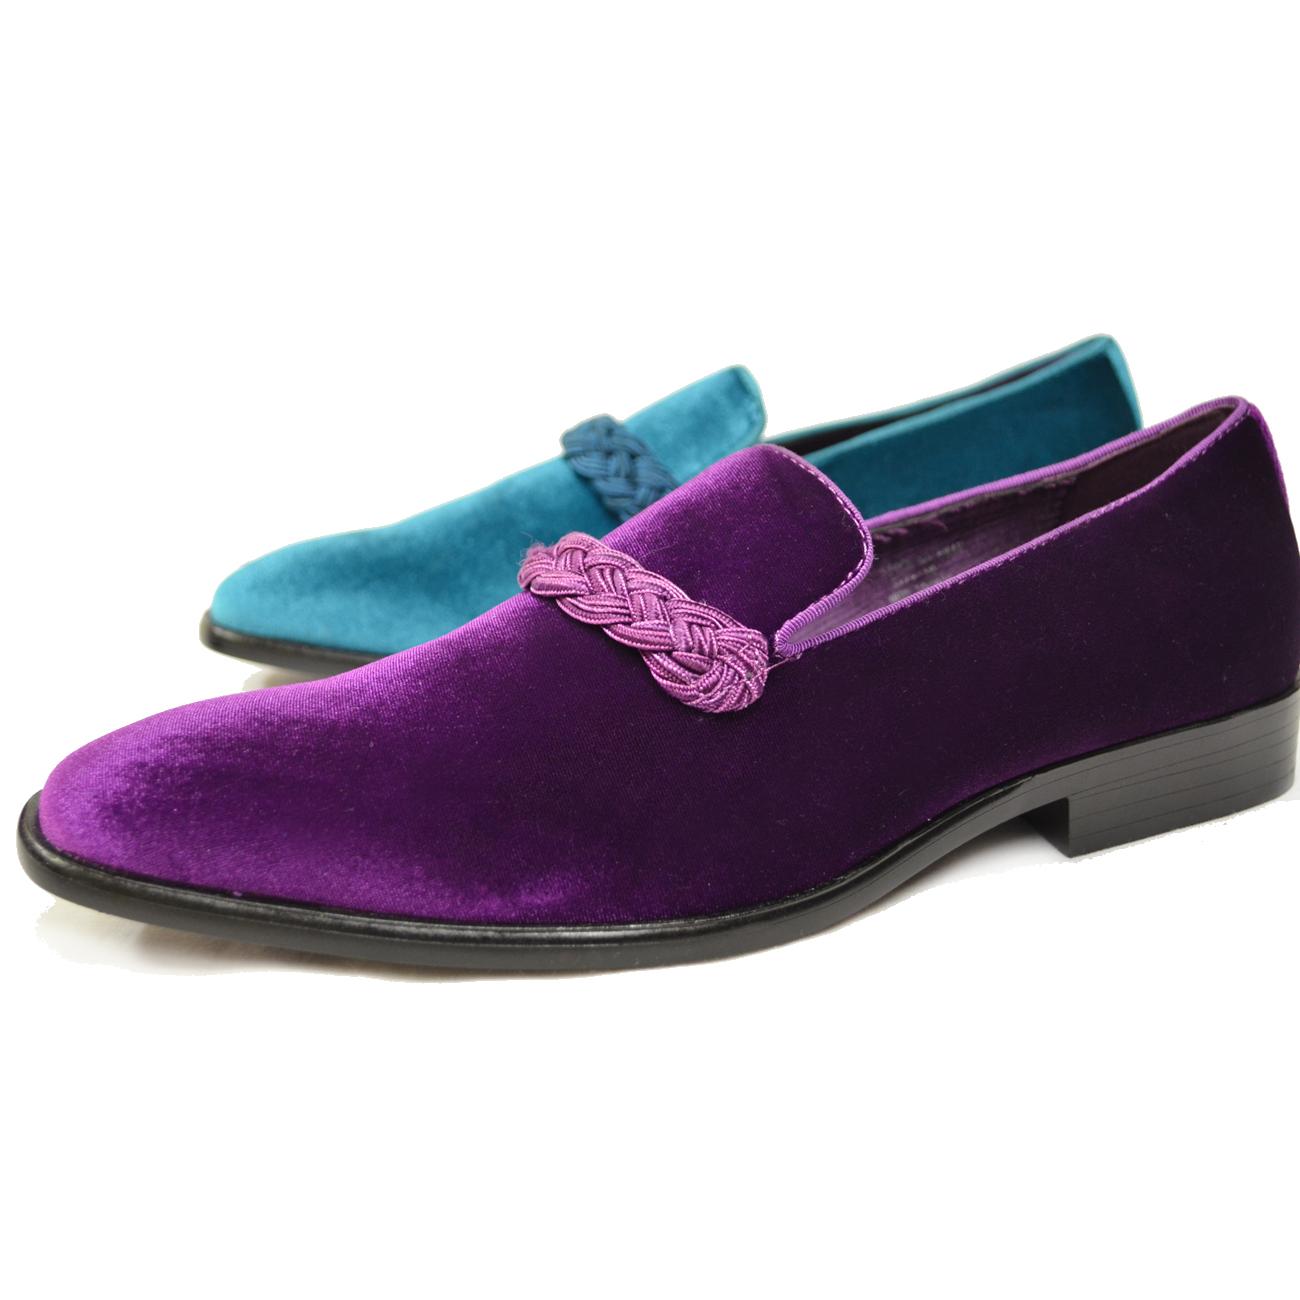 Antonio Cerrelli Purple Velvet Slip-On Loafers 6845 - $69.90 :: Upscale ...